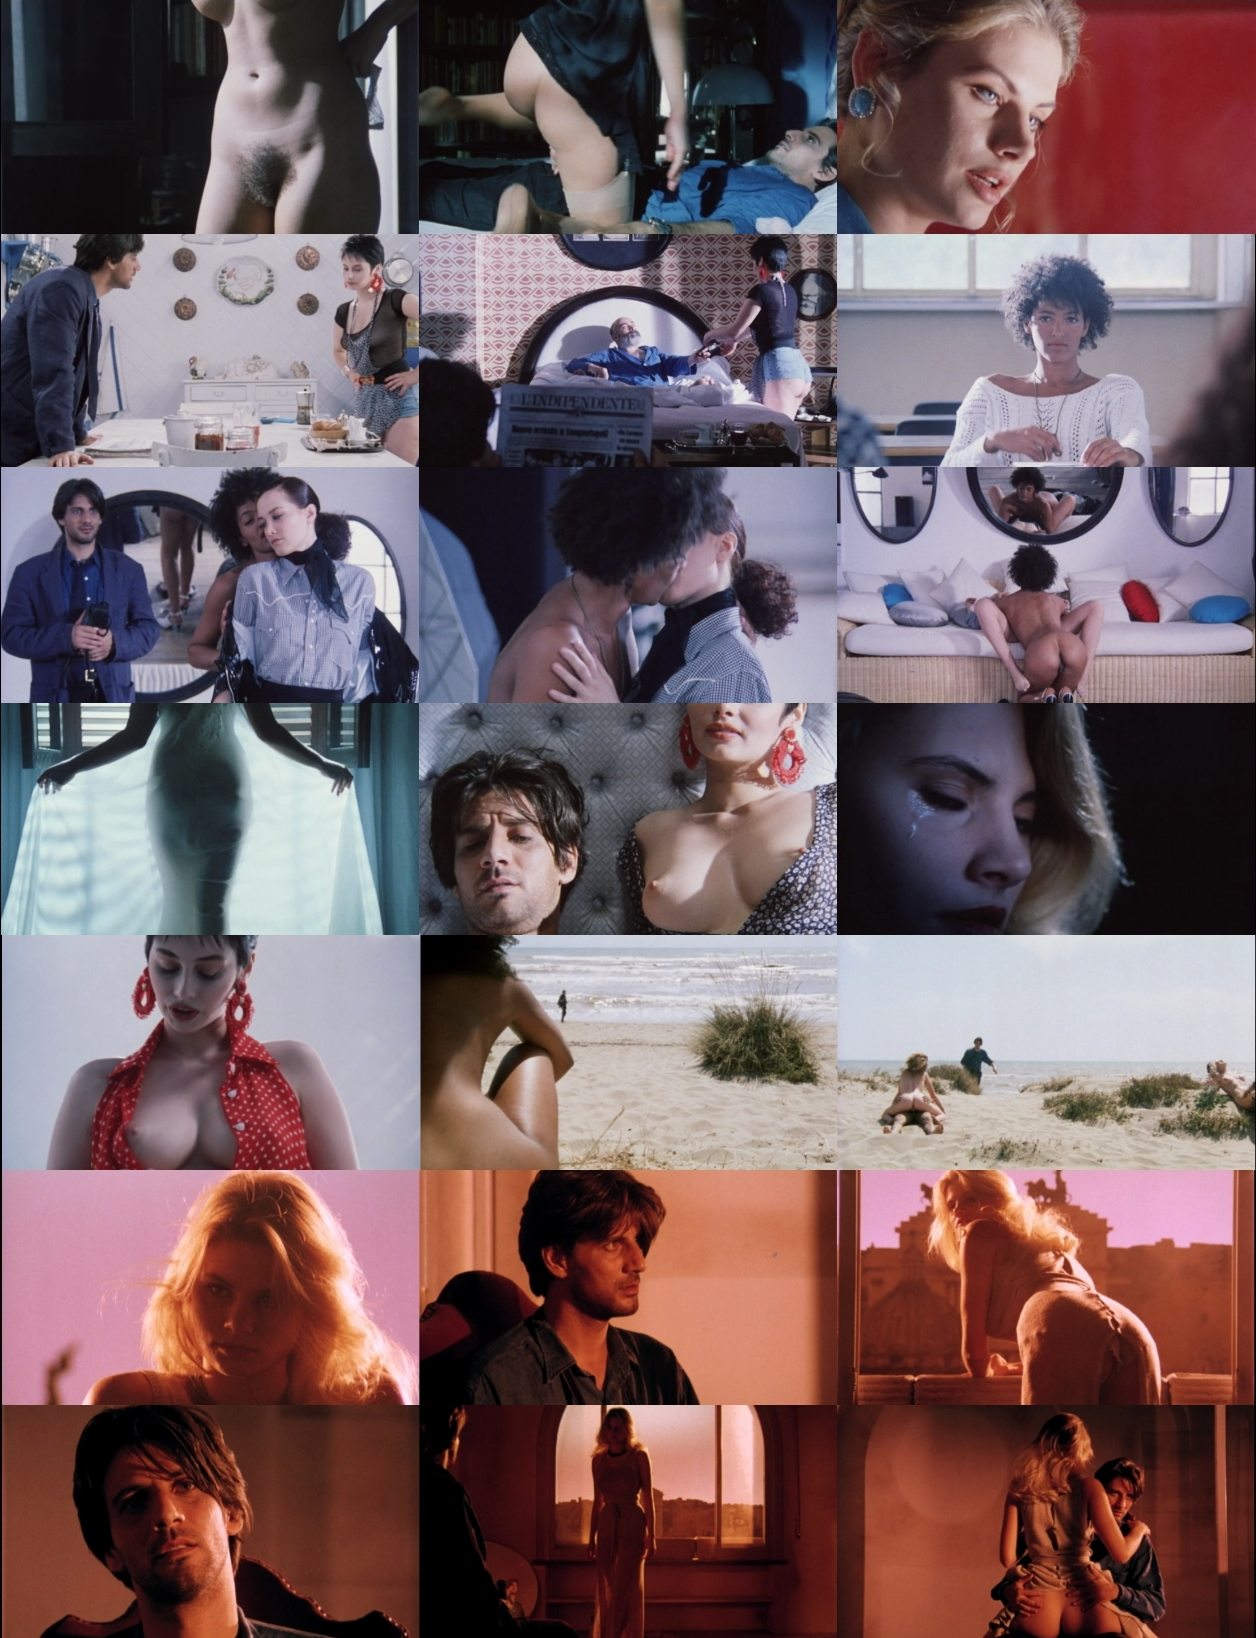 The Voyeur / Luomo che guarda (1994) Tinto Brass, Katarina Vasilissa, Francesco Casale, Cristina Garavaglia, Drama, Romance, Erotic RareFilm picture